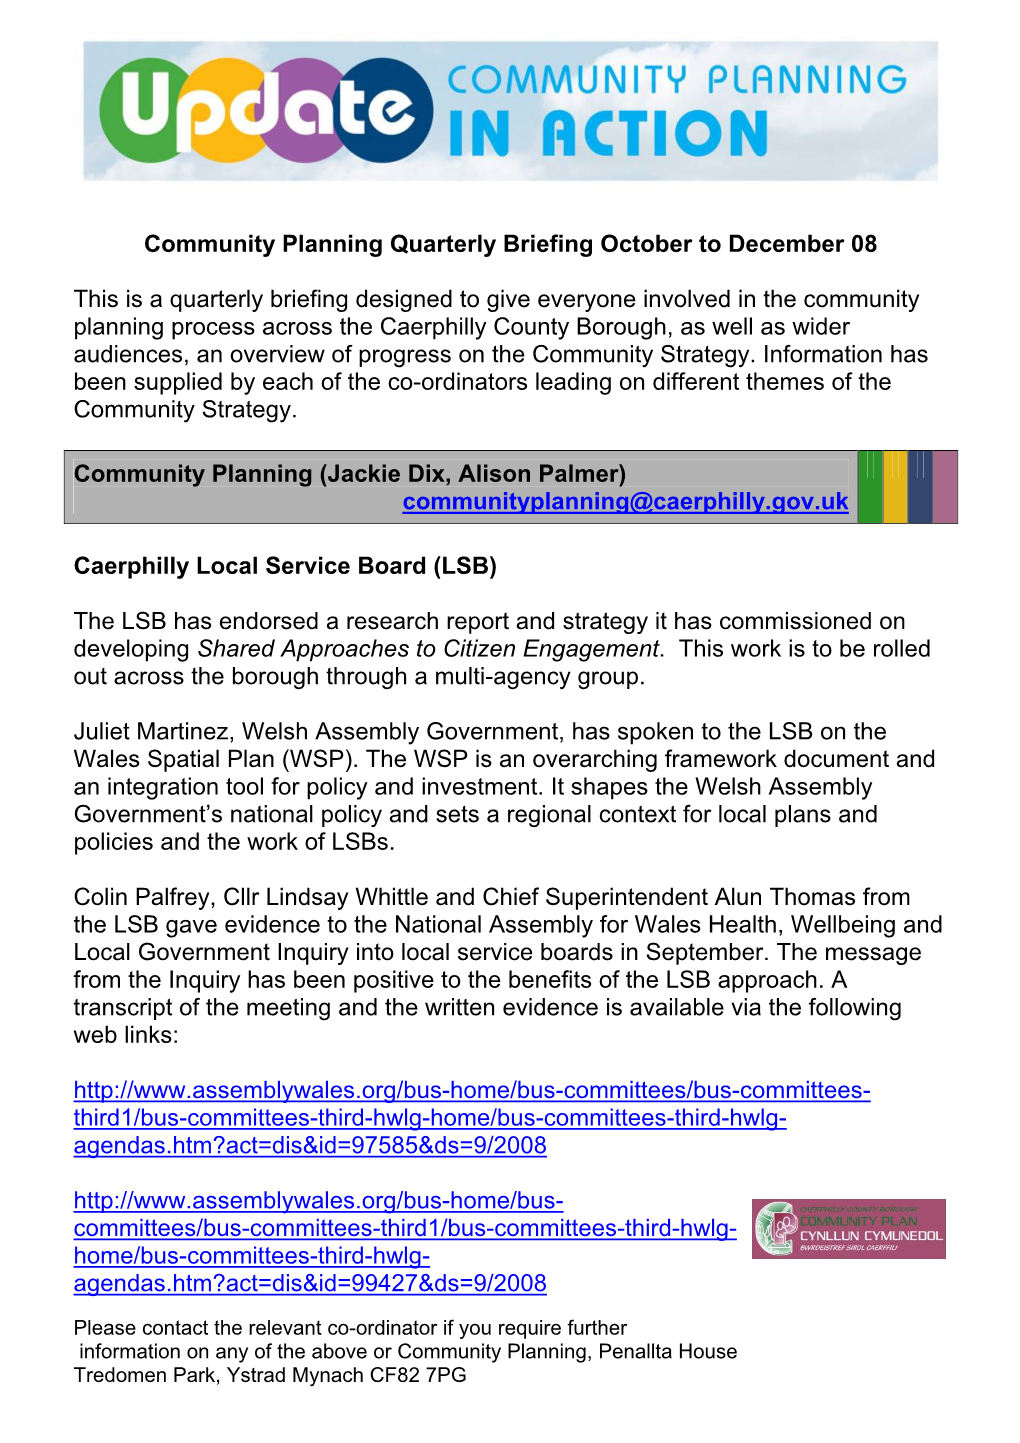 Community Planning (Jackie Dix, Alison Palmer) Communityplanning@Caerphilly.Gov.Uk